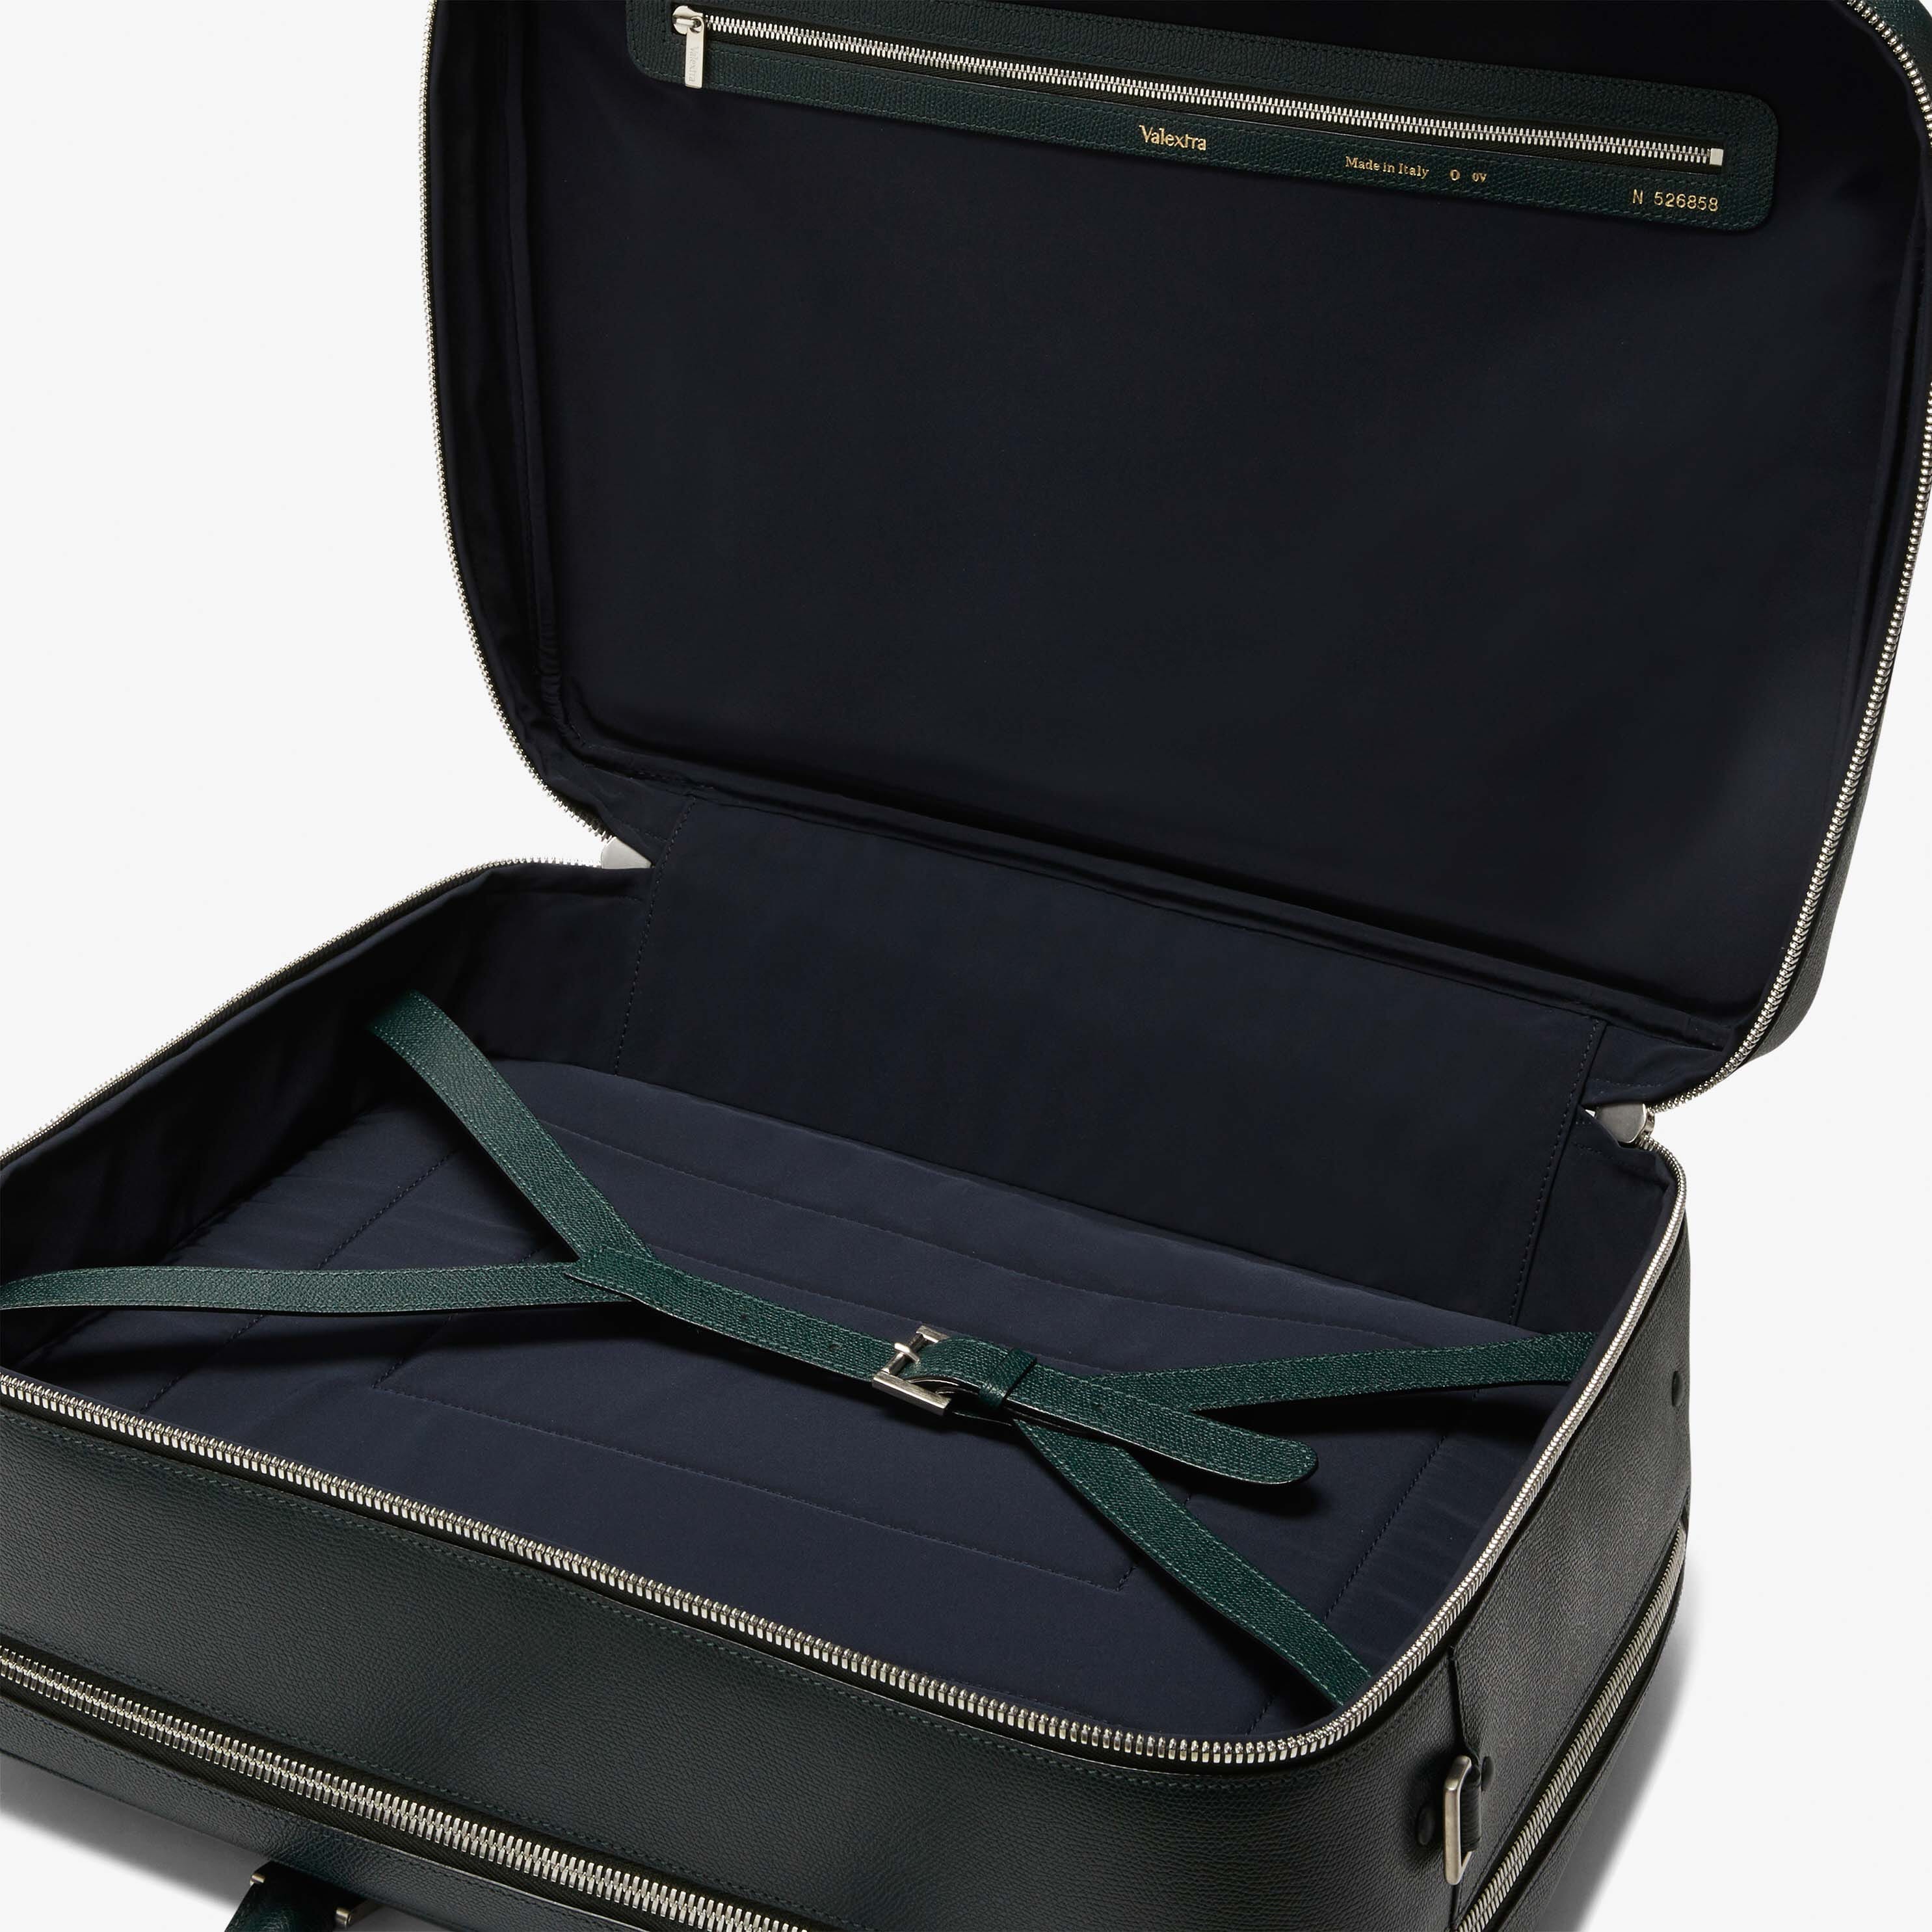 Avietta Travel Bag Two Chambers - Valextra Green - Vitello VS - Valextra - 4